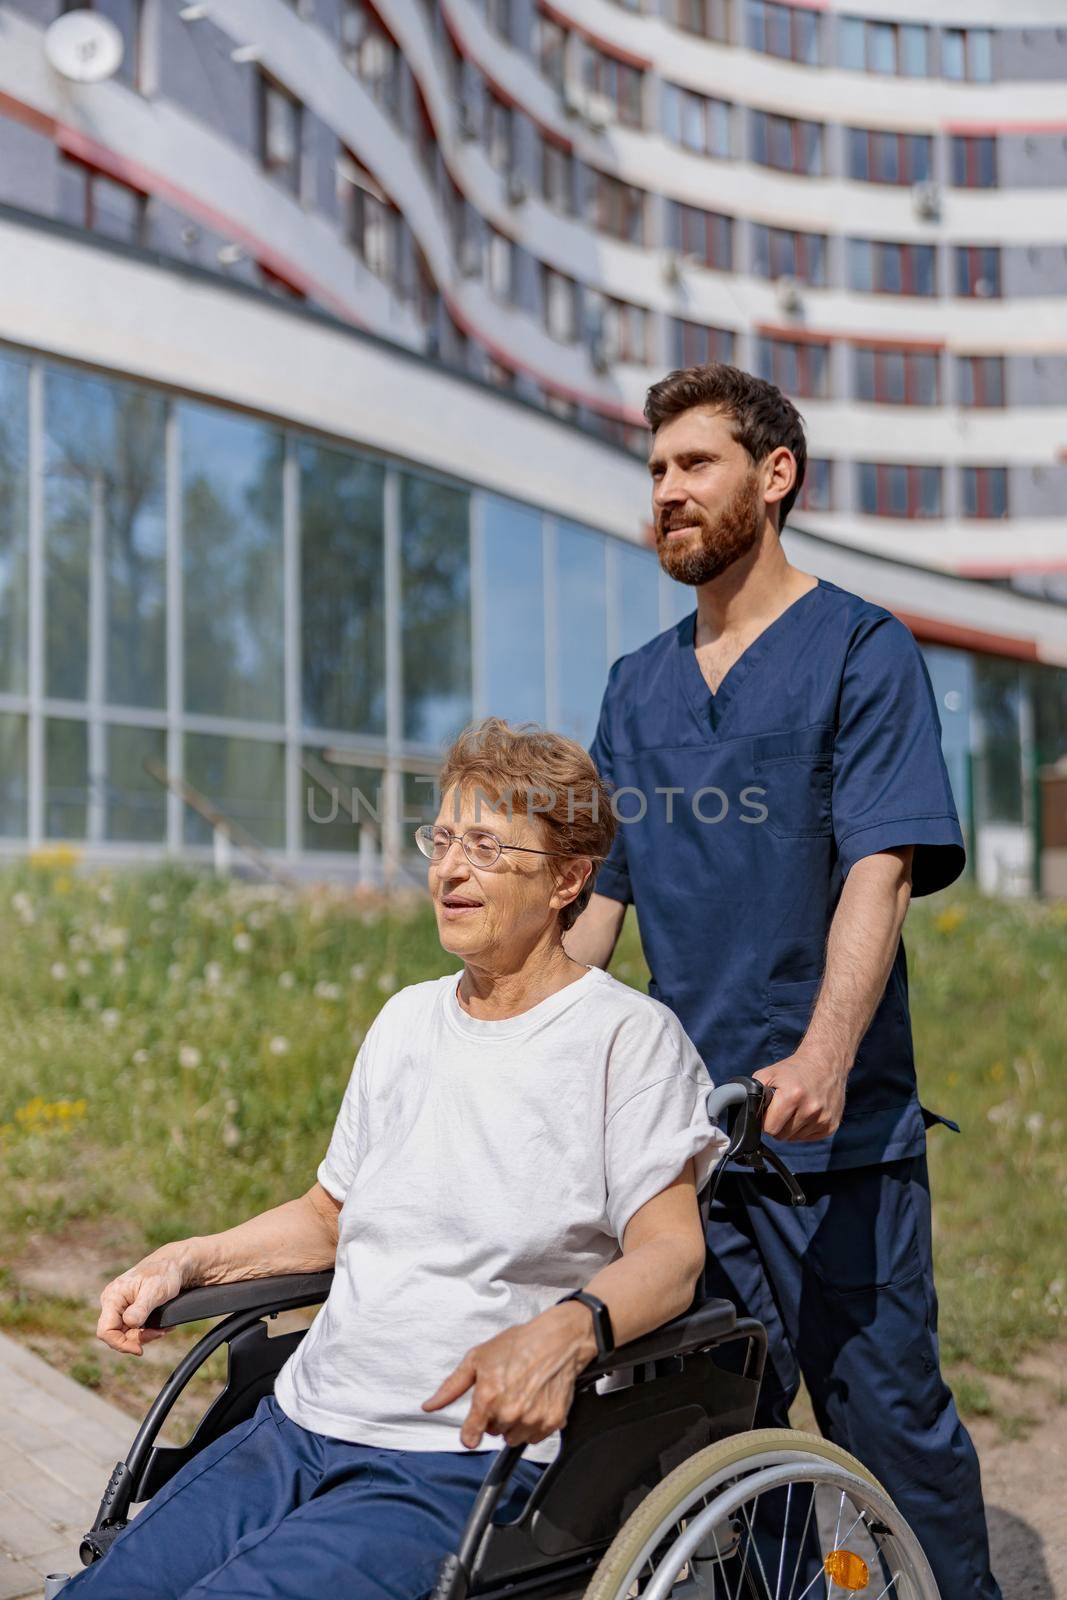 Nurse talking to patient on wheelchair in hospital yard during walk by Yaroslav_astakhov